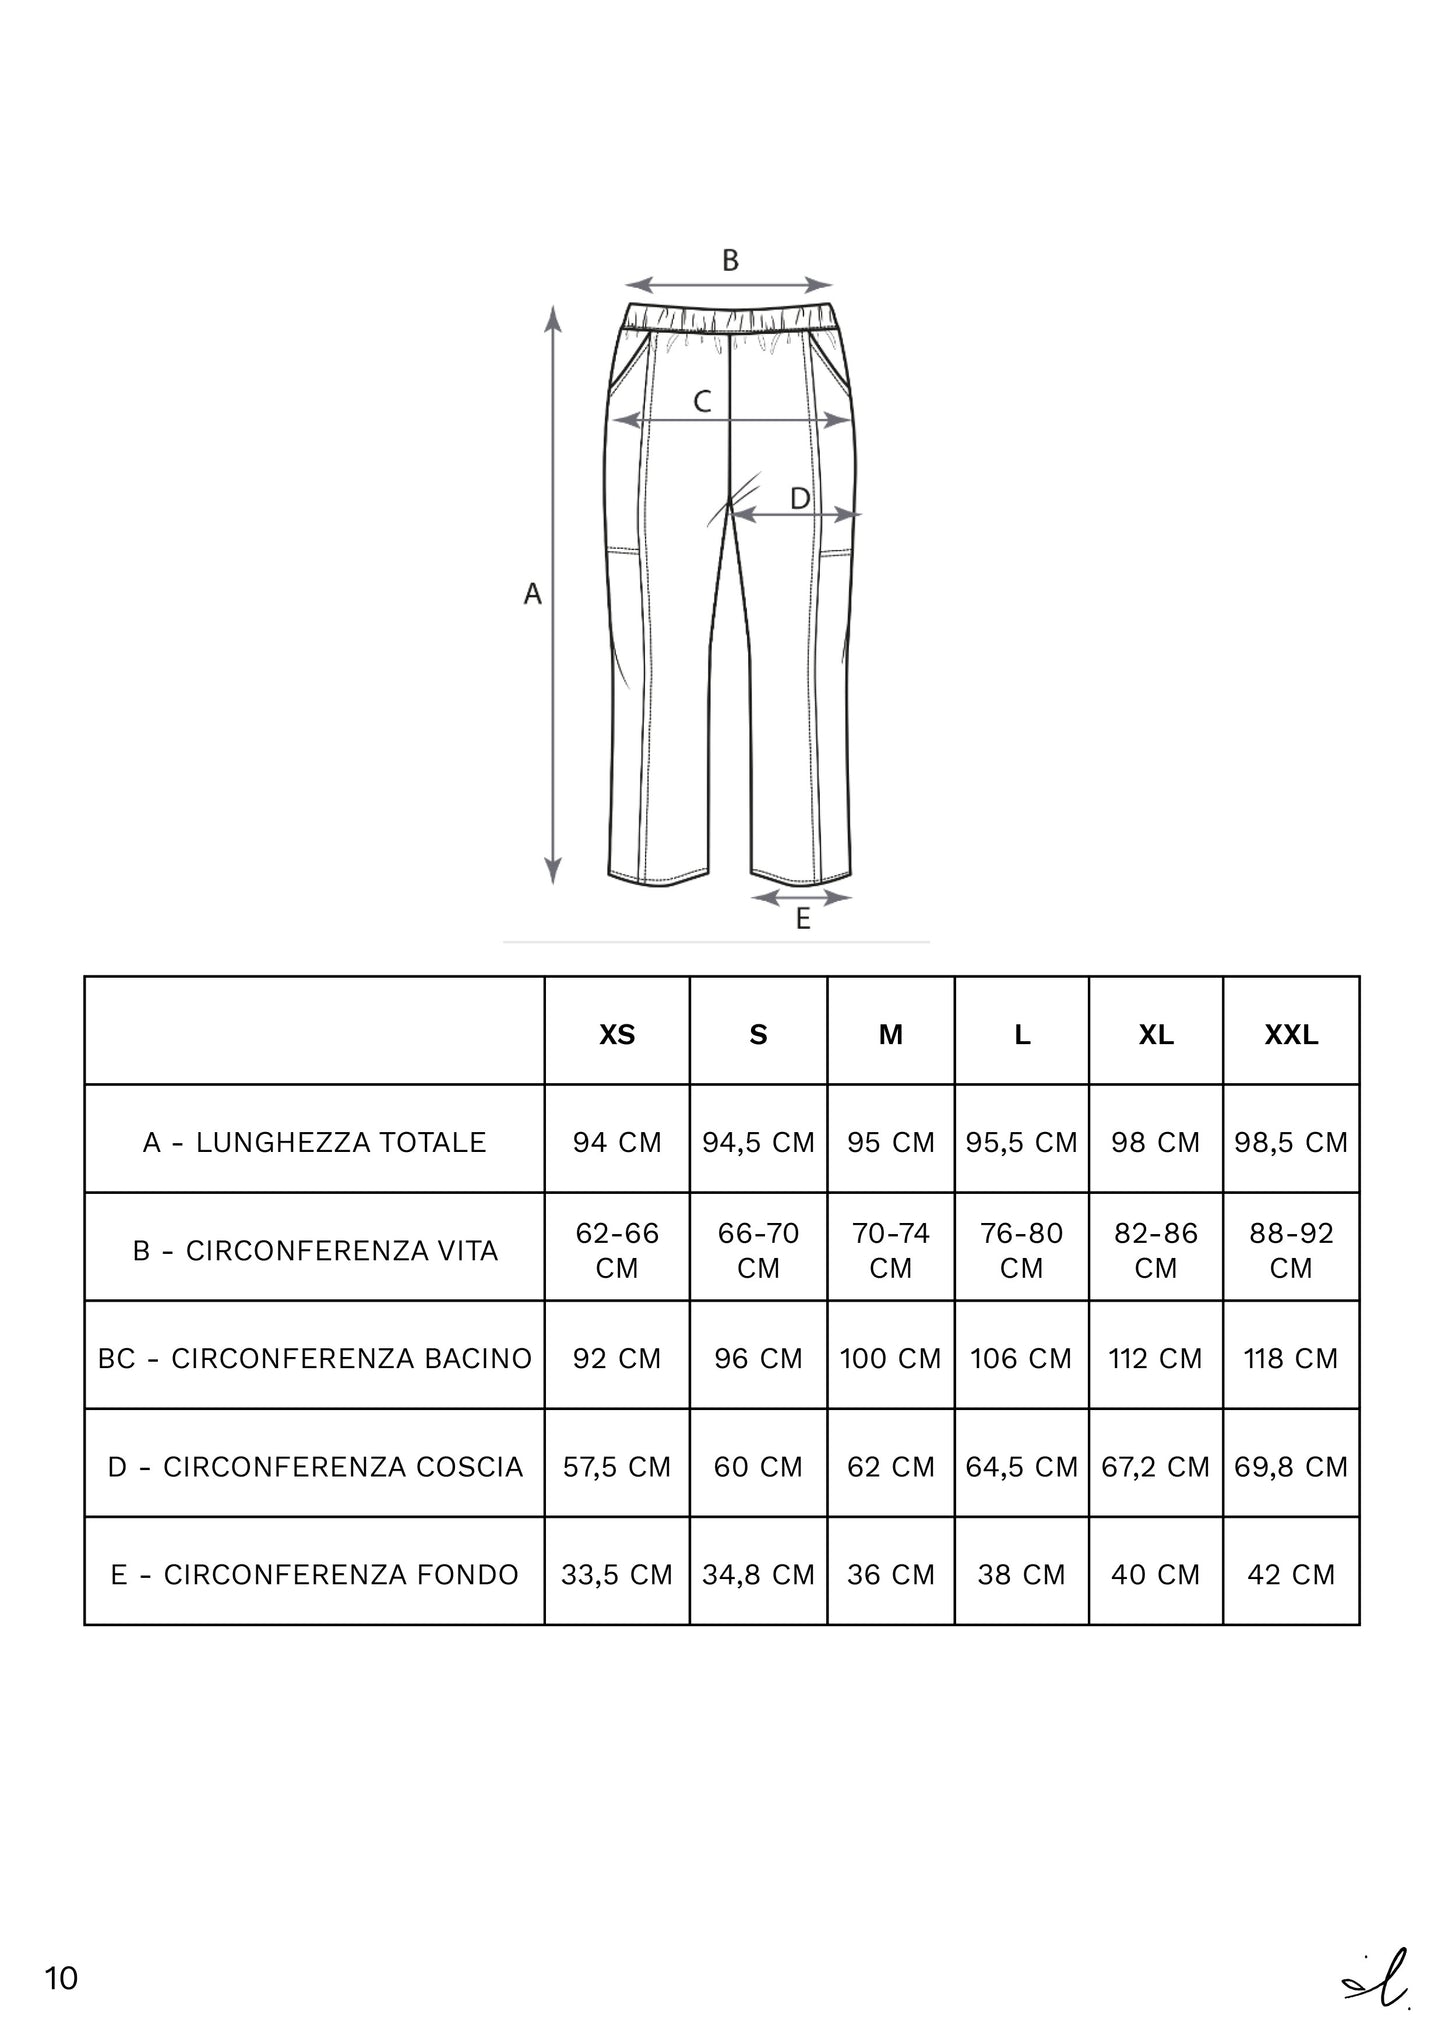 Pantalone Dafne: Cartamodello digitale + tutorial illustrato